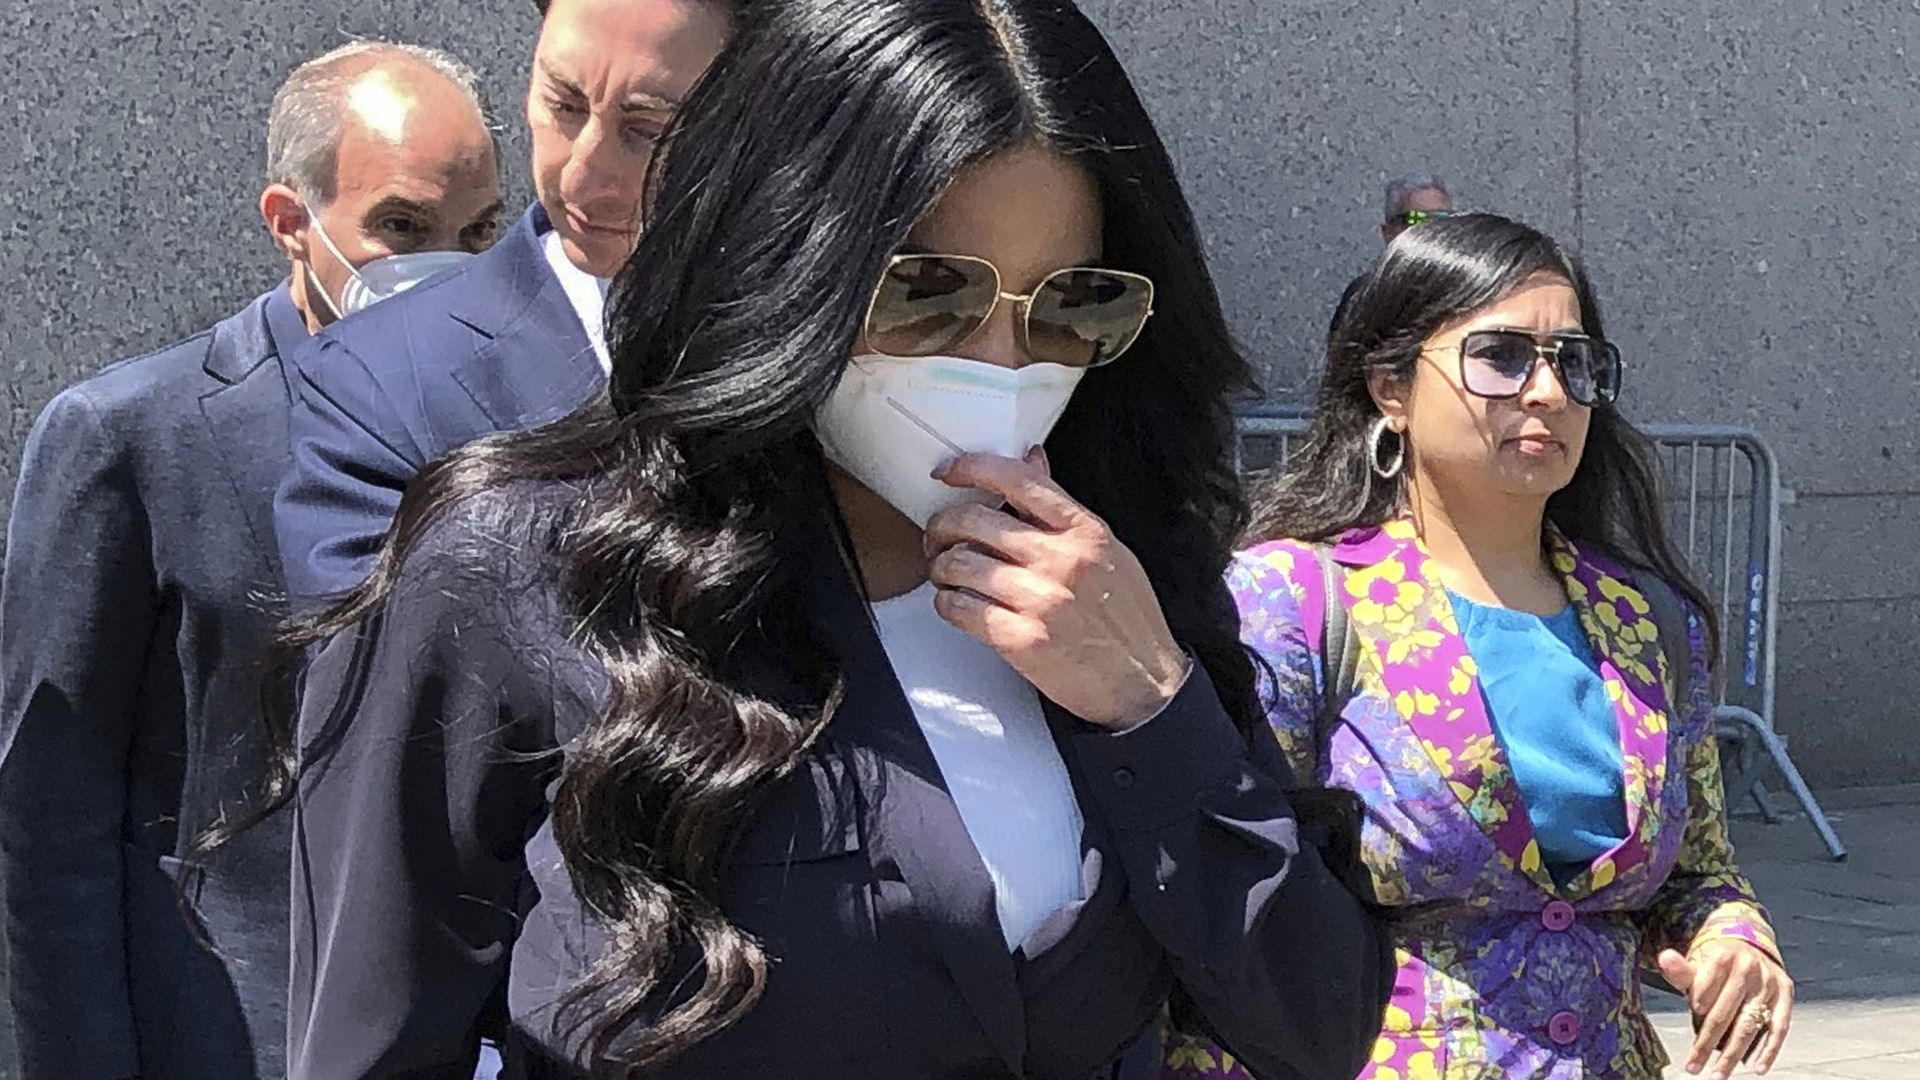 Jennifer Shah walks away in sunglasses and a face mask.